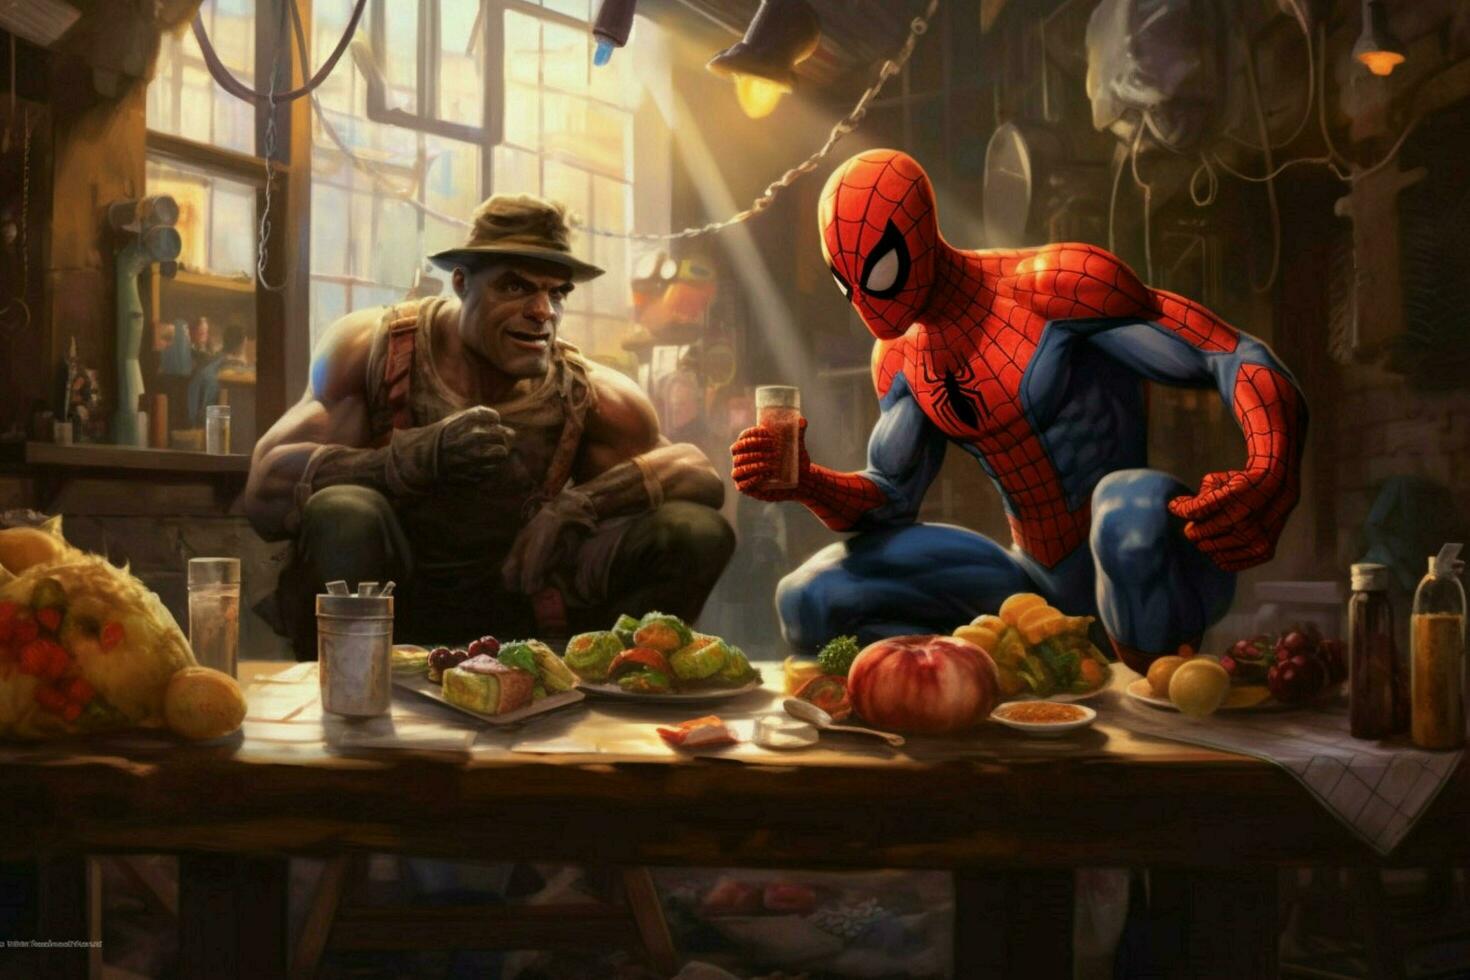 homme araignée avec héros ami manger nourrituredessin animé style photo